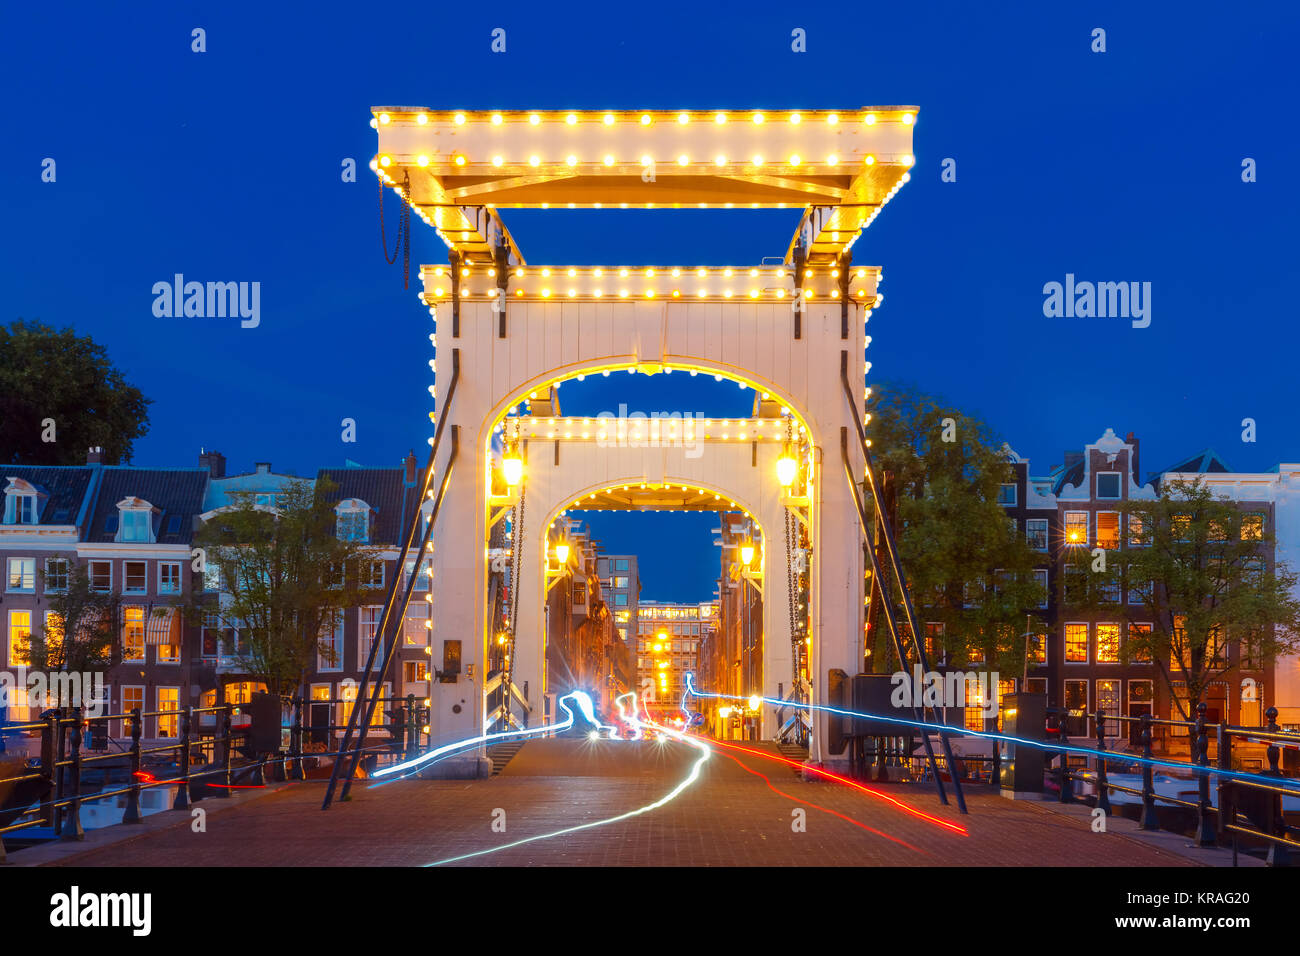 Magere Brug, Skinny bridge, Amsterdam, Netherlands Stock Photo